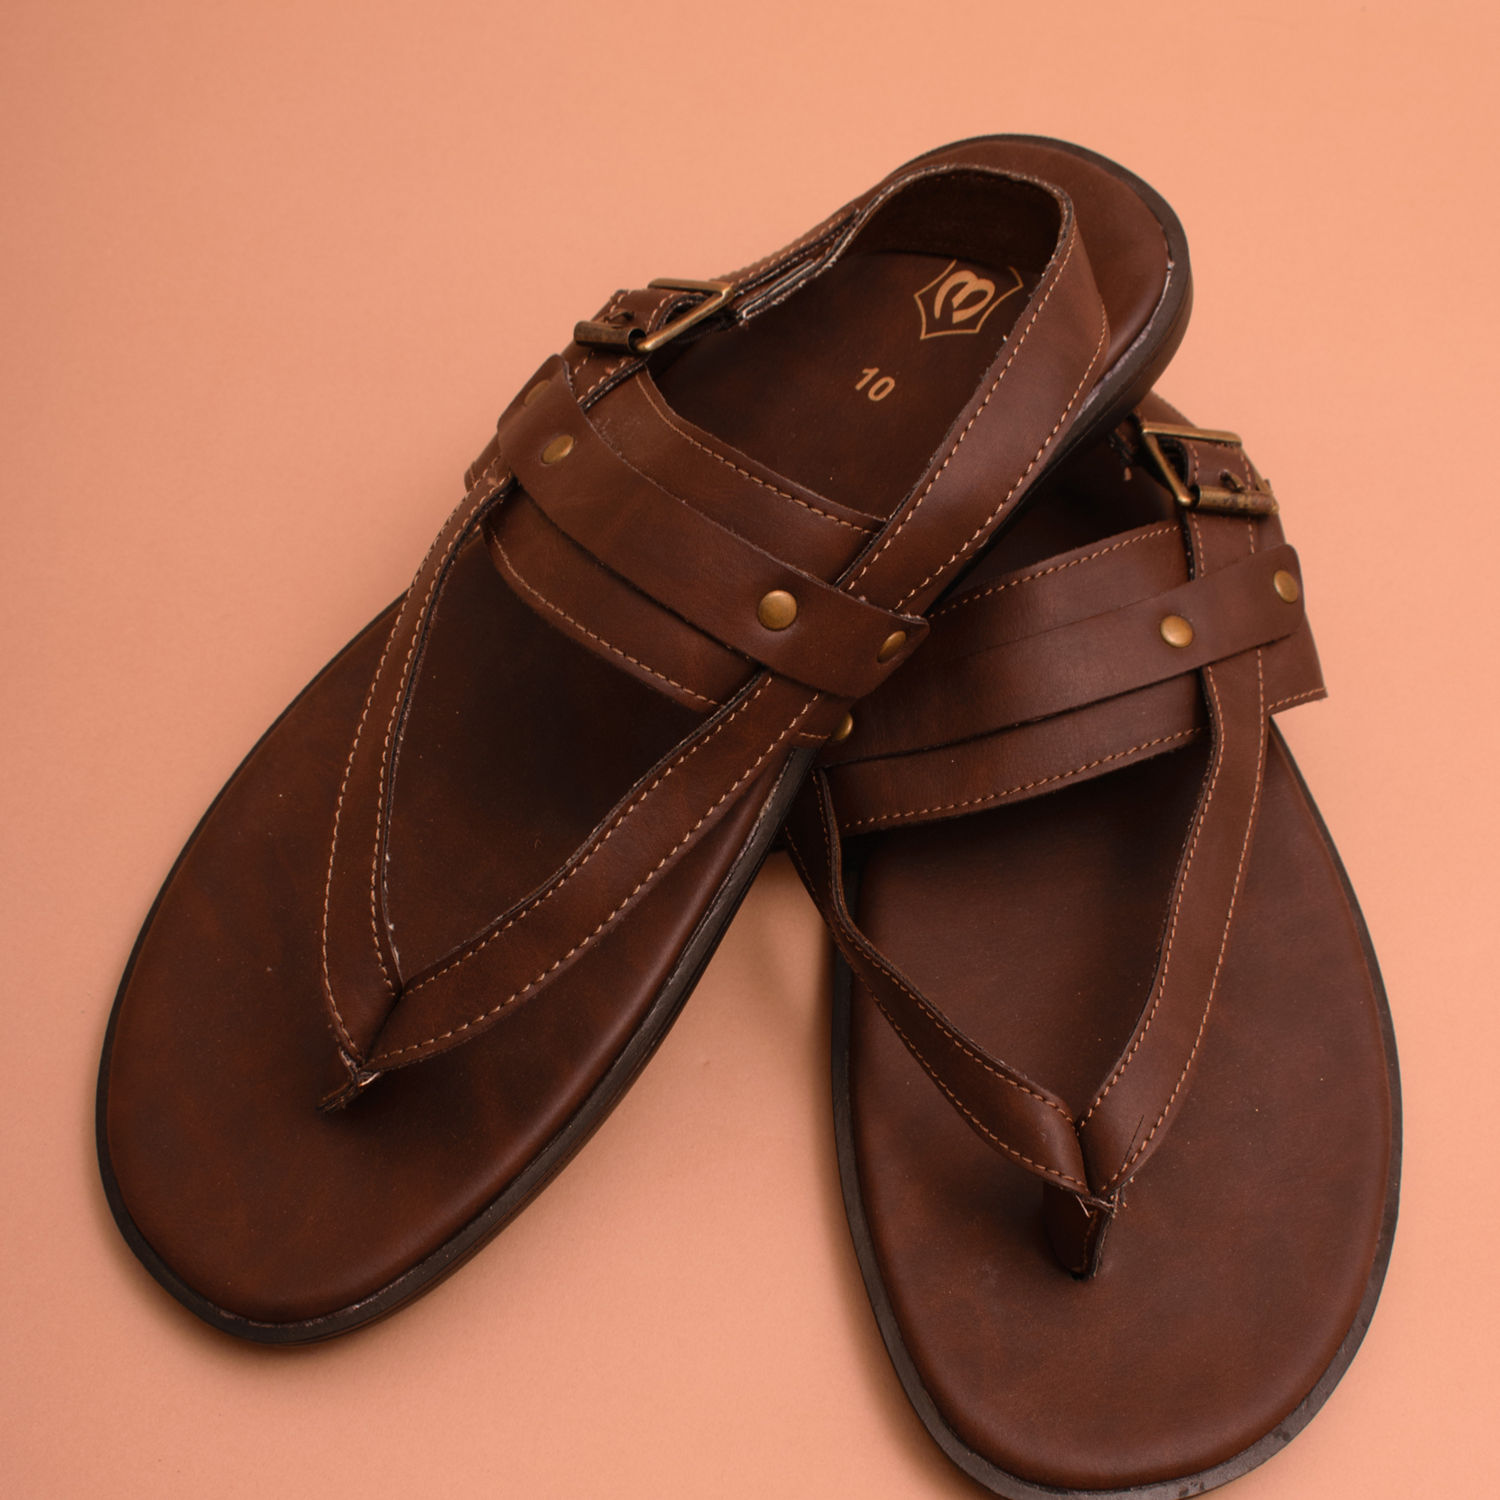 Buy Shoetopia Stylish Ethnic Black Flat Sandals for Women & Girls online